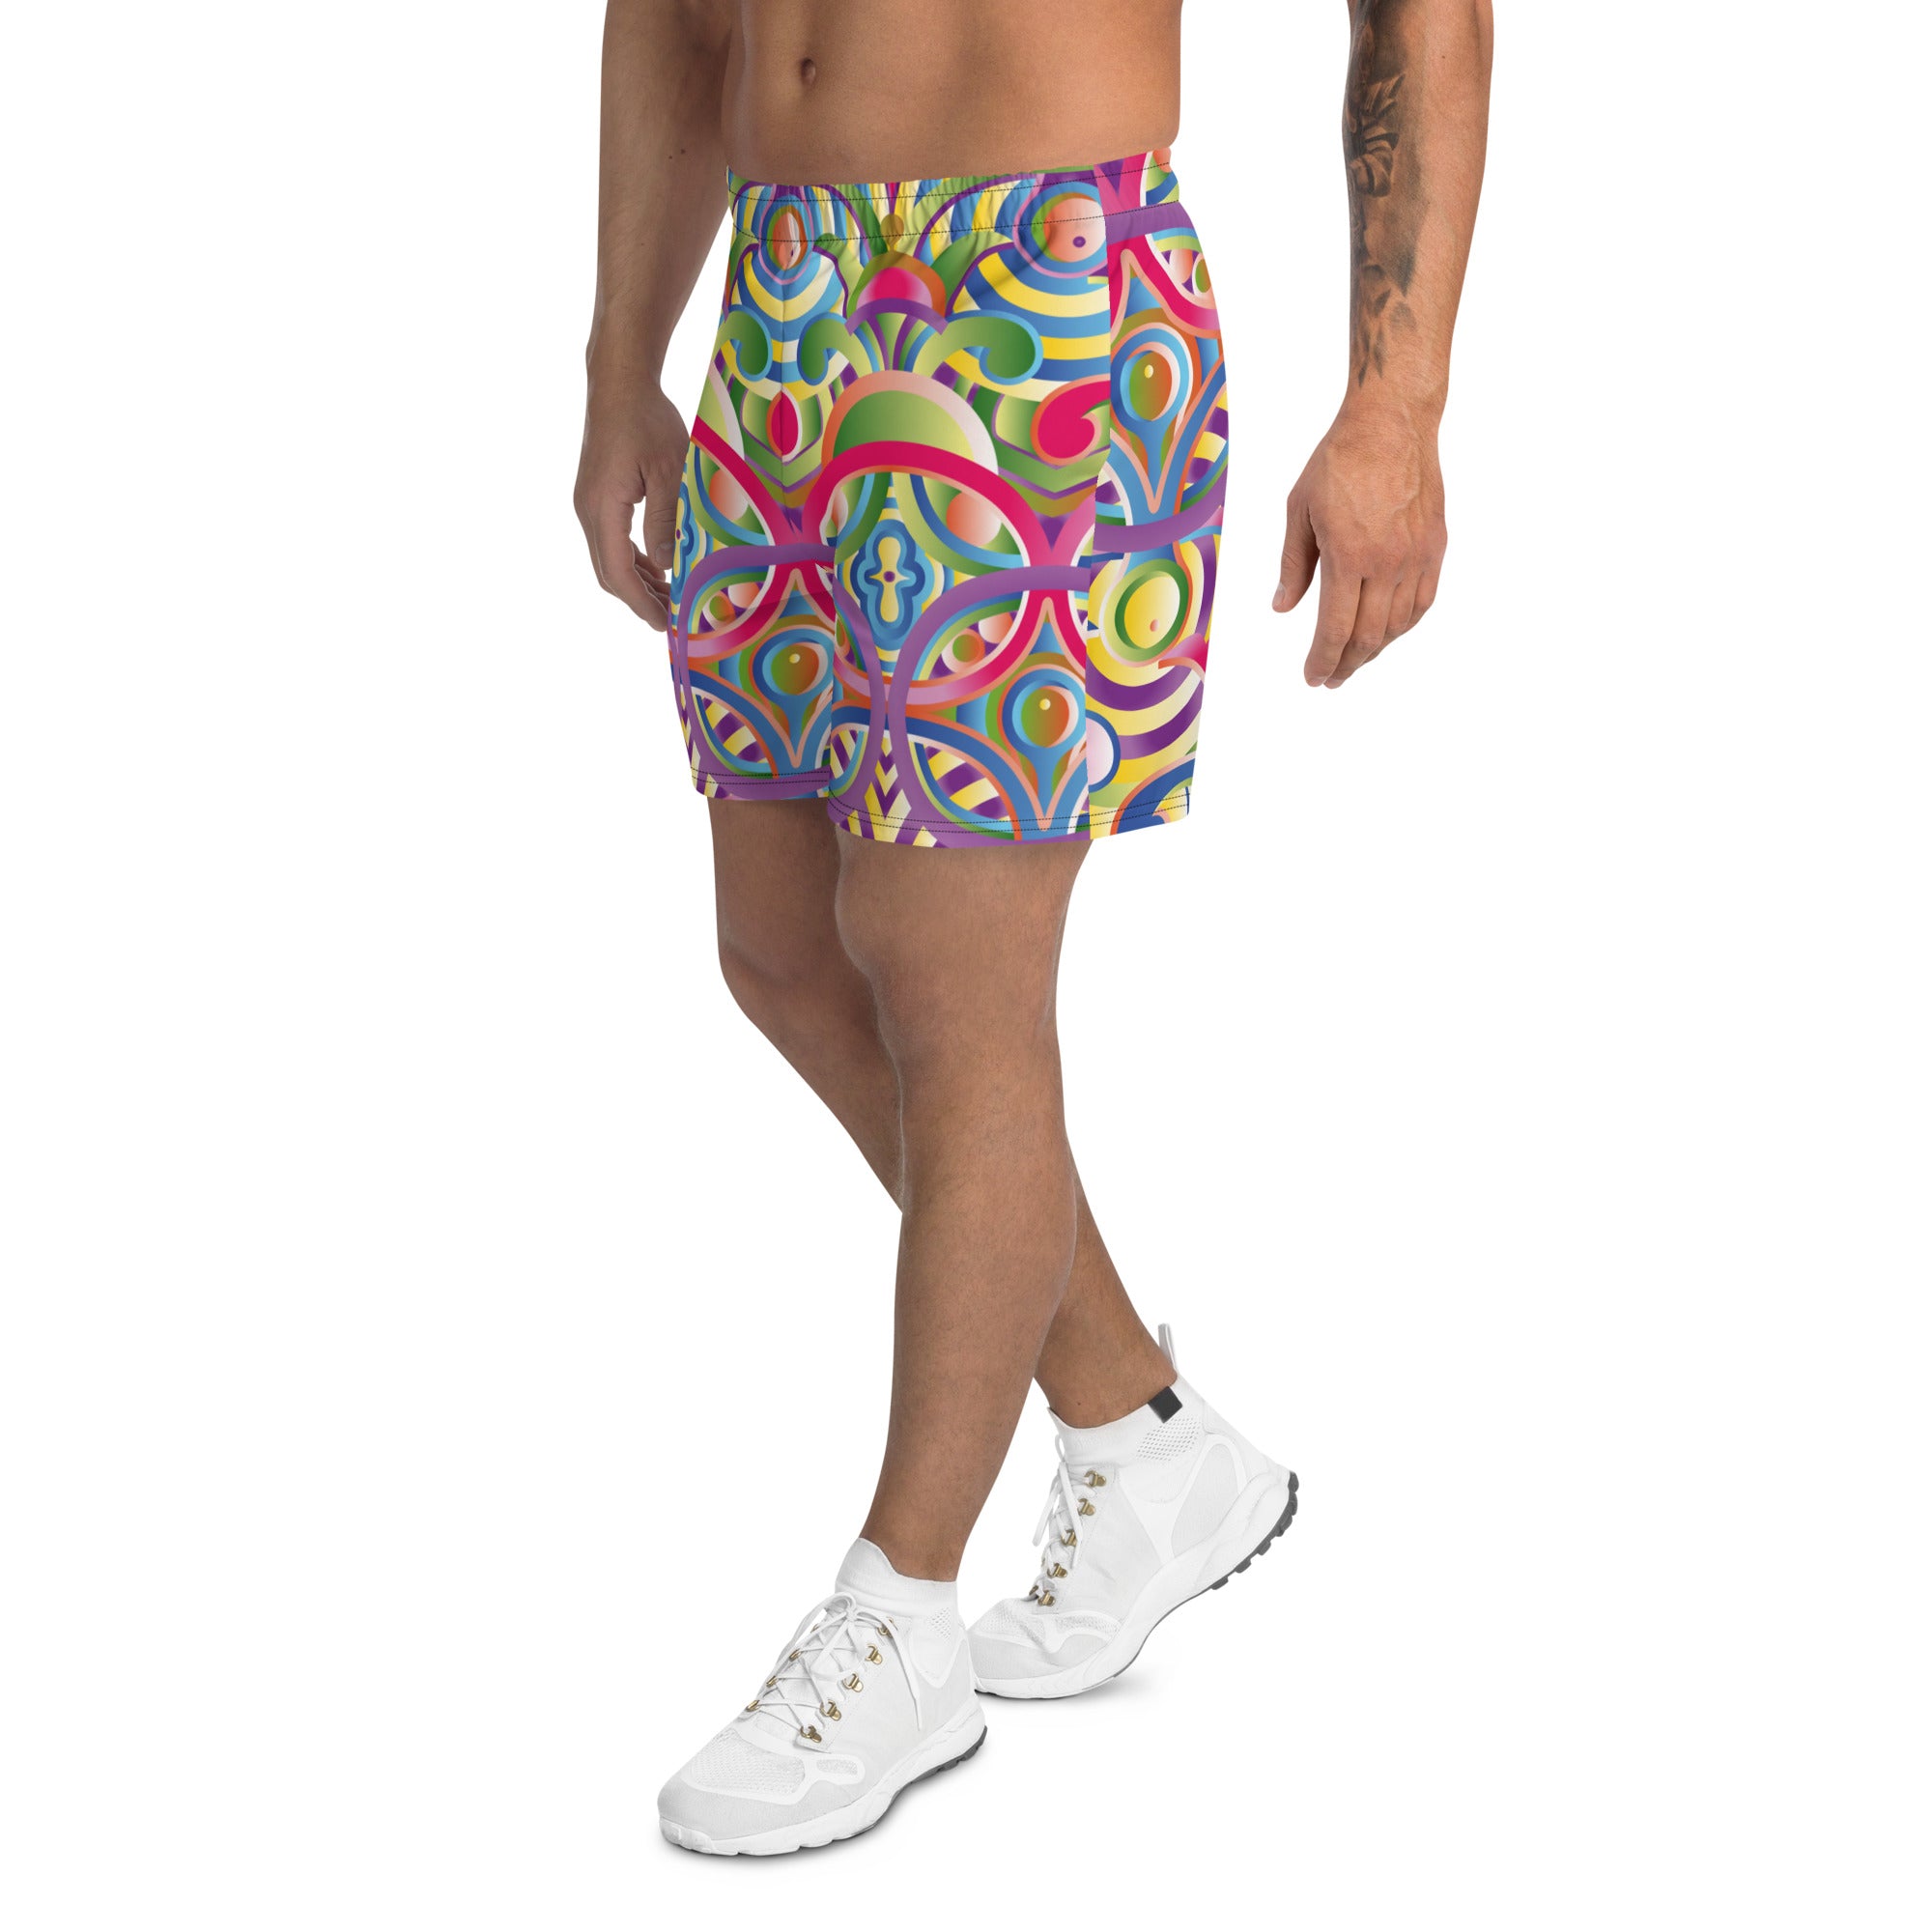 Cassata Men's Recycled Athletic Shorts